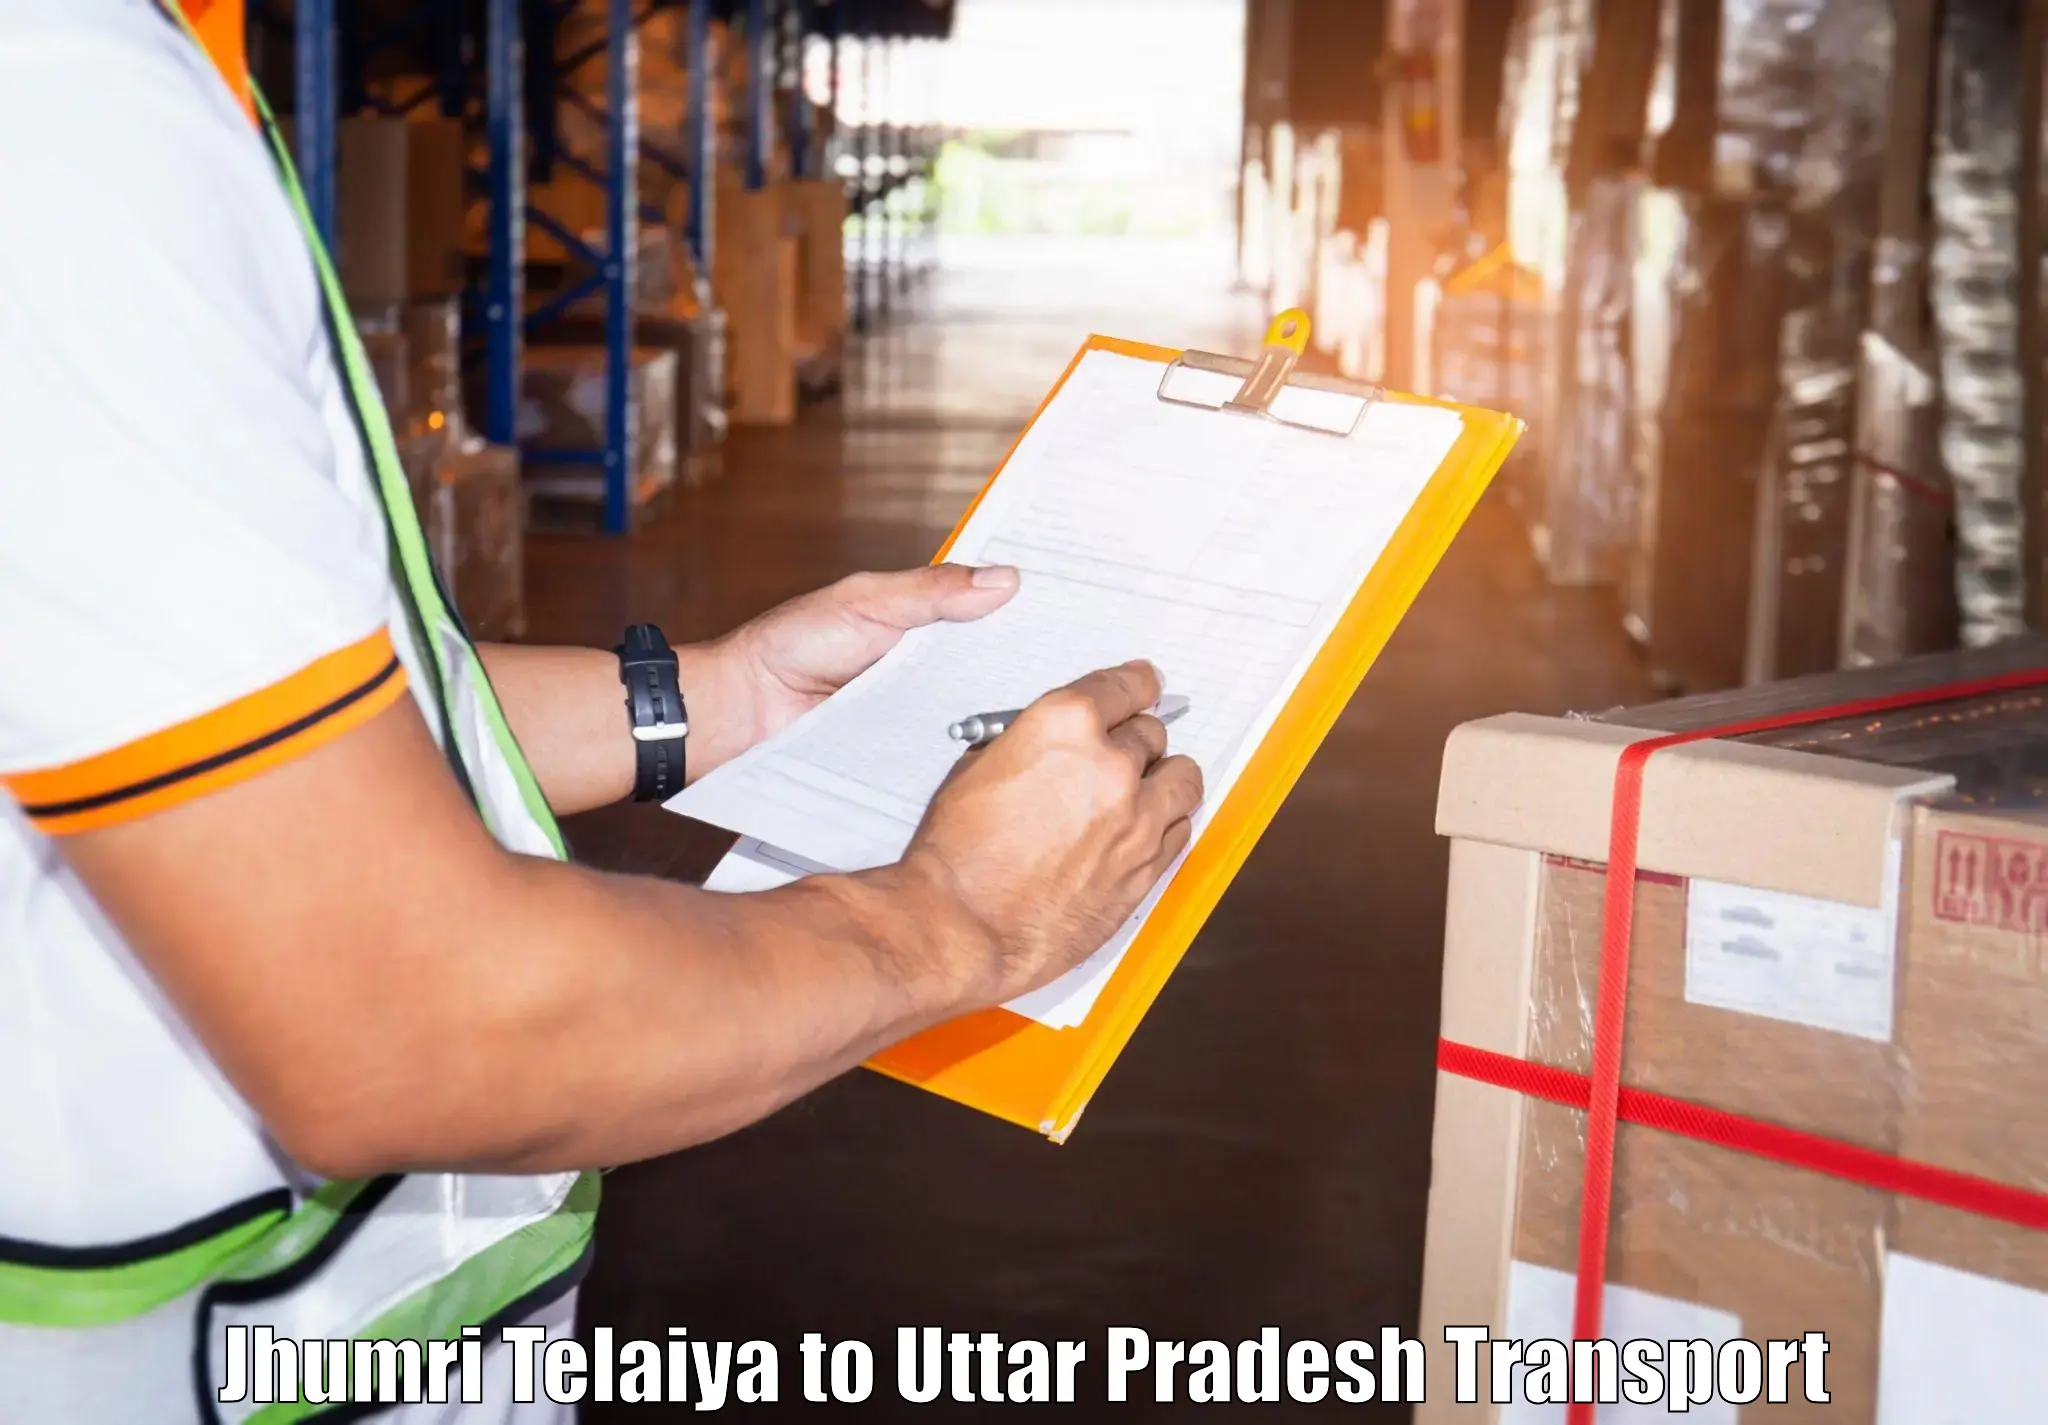 Truck transport companies in India Jhumri Telaiya to Uttar Pradesh